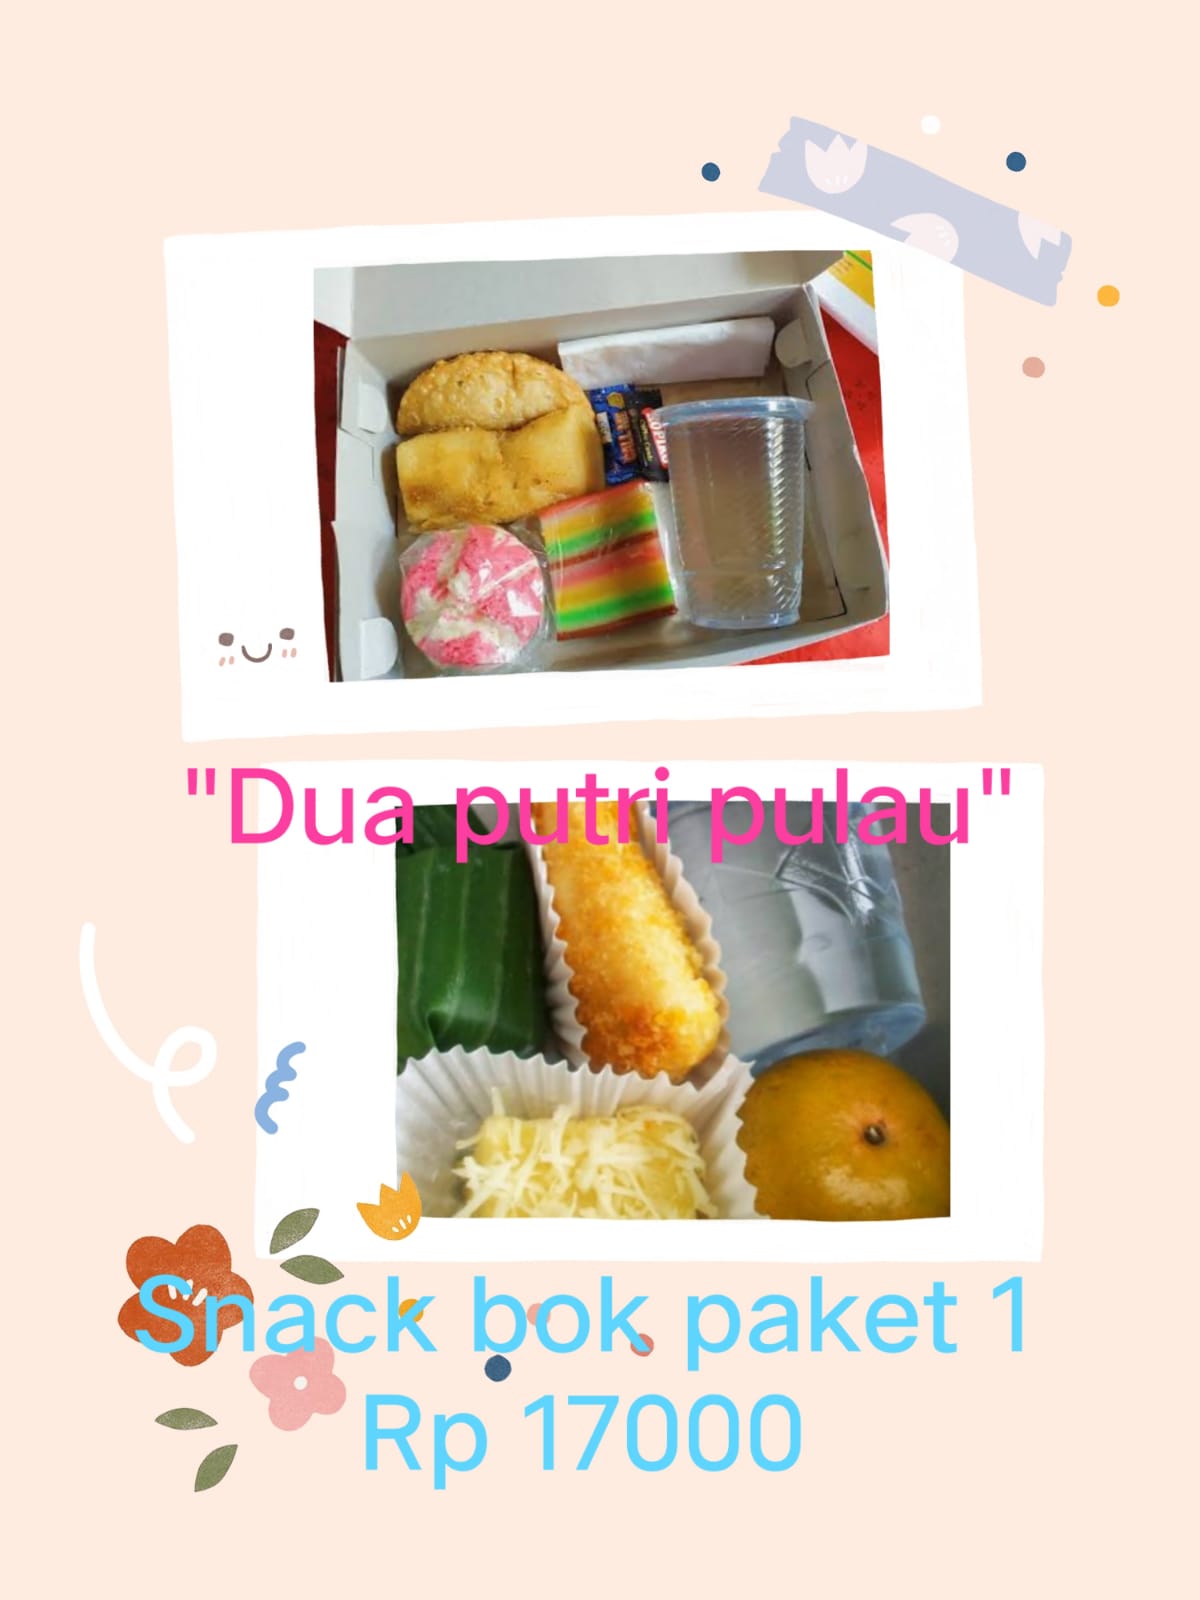 Snack Box Paket 1 Dua Putri Pulau